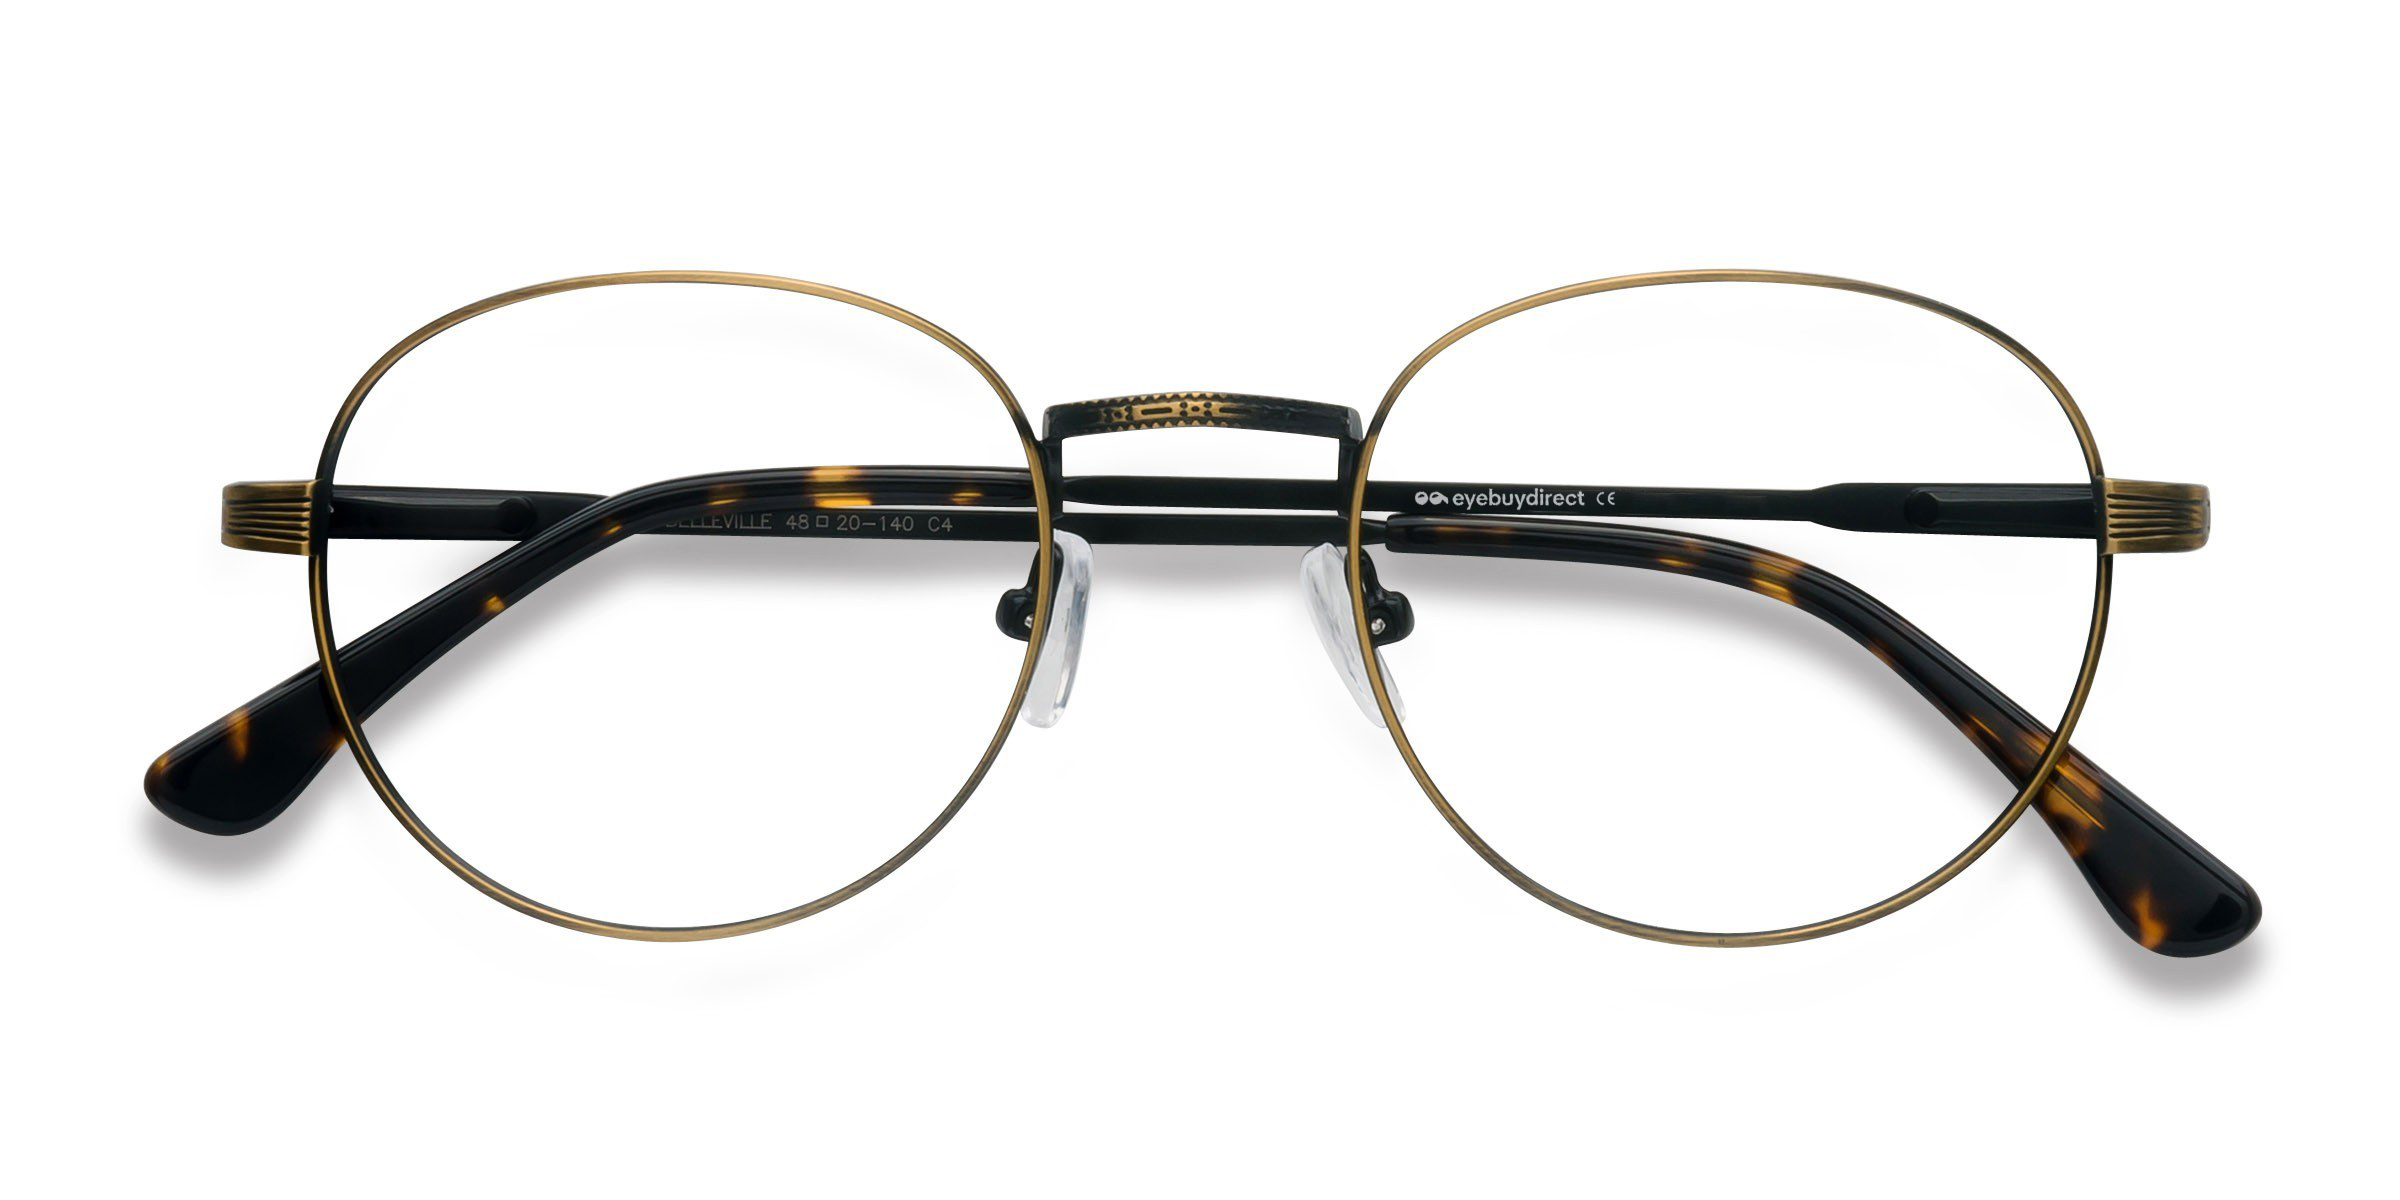 Vintage Style Glasses Frames For Men And Women Eyebuydirect 